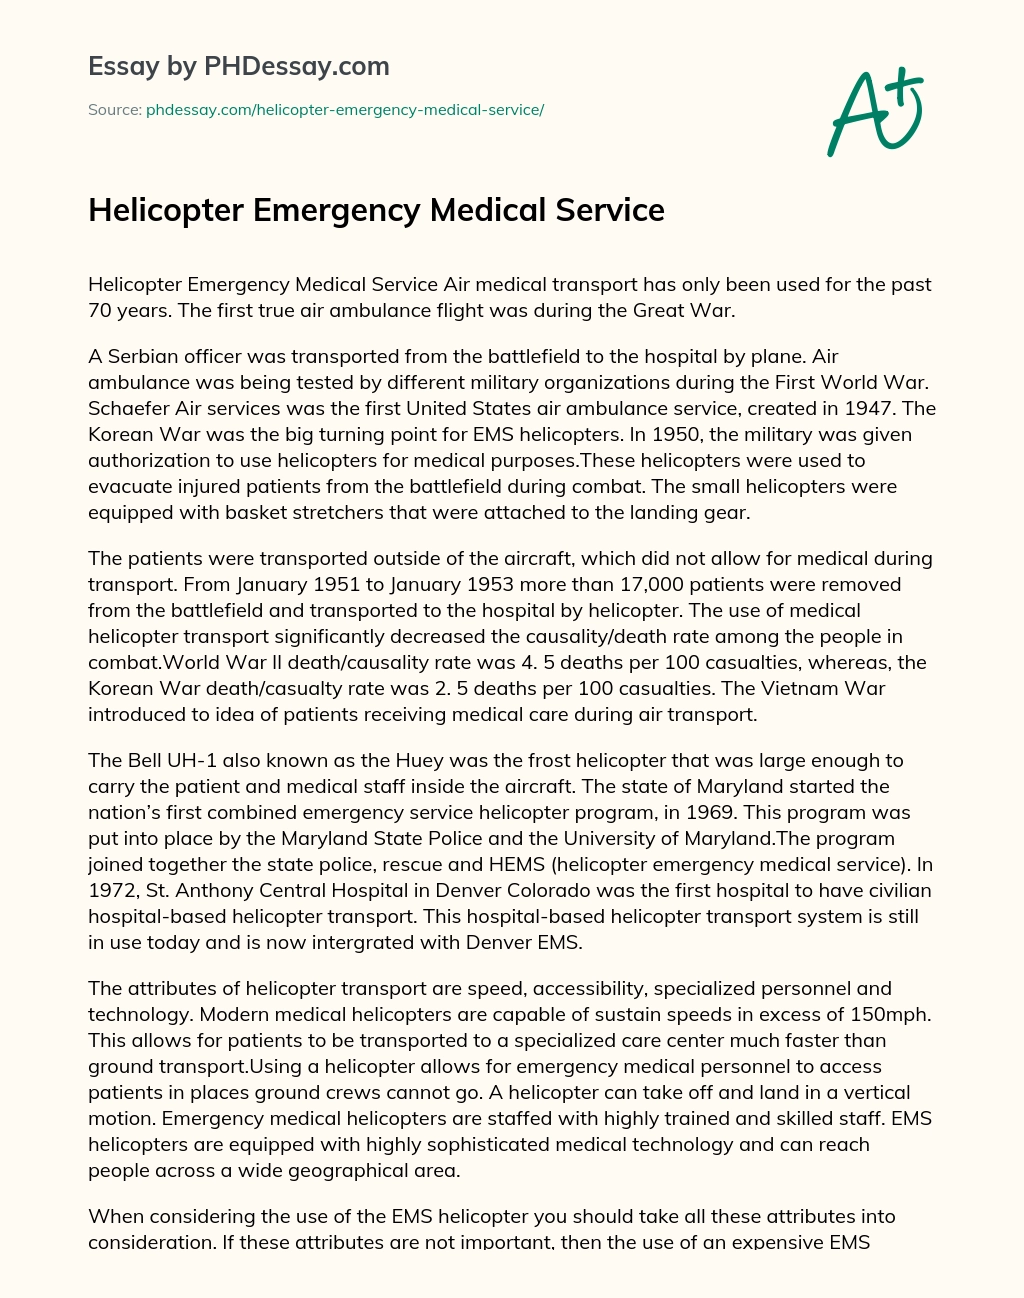 Helicopter Emergency Medical Service essay